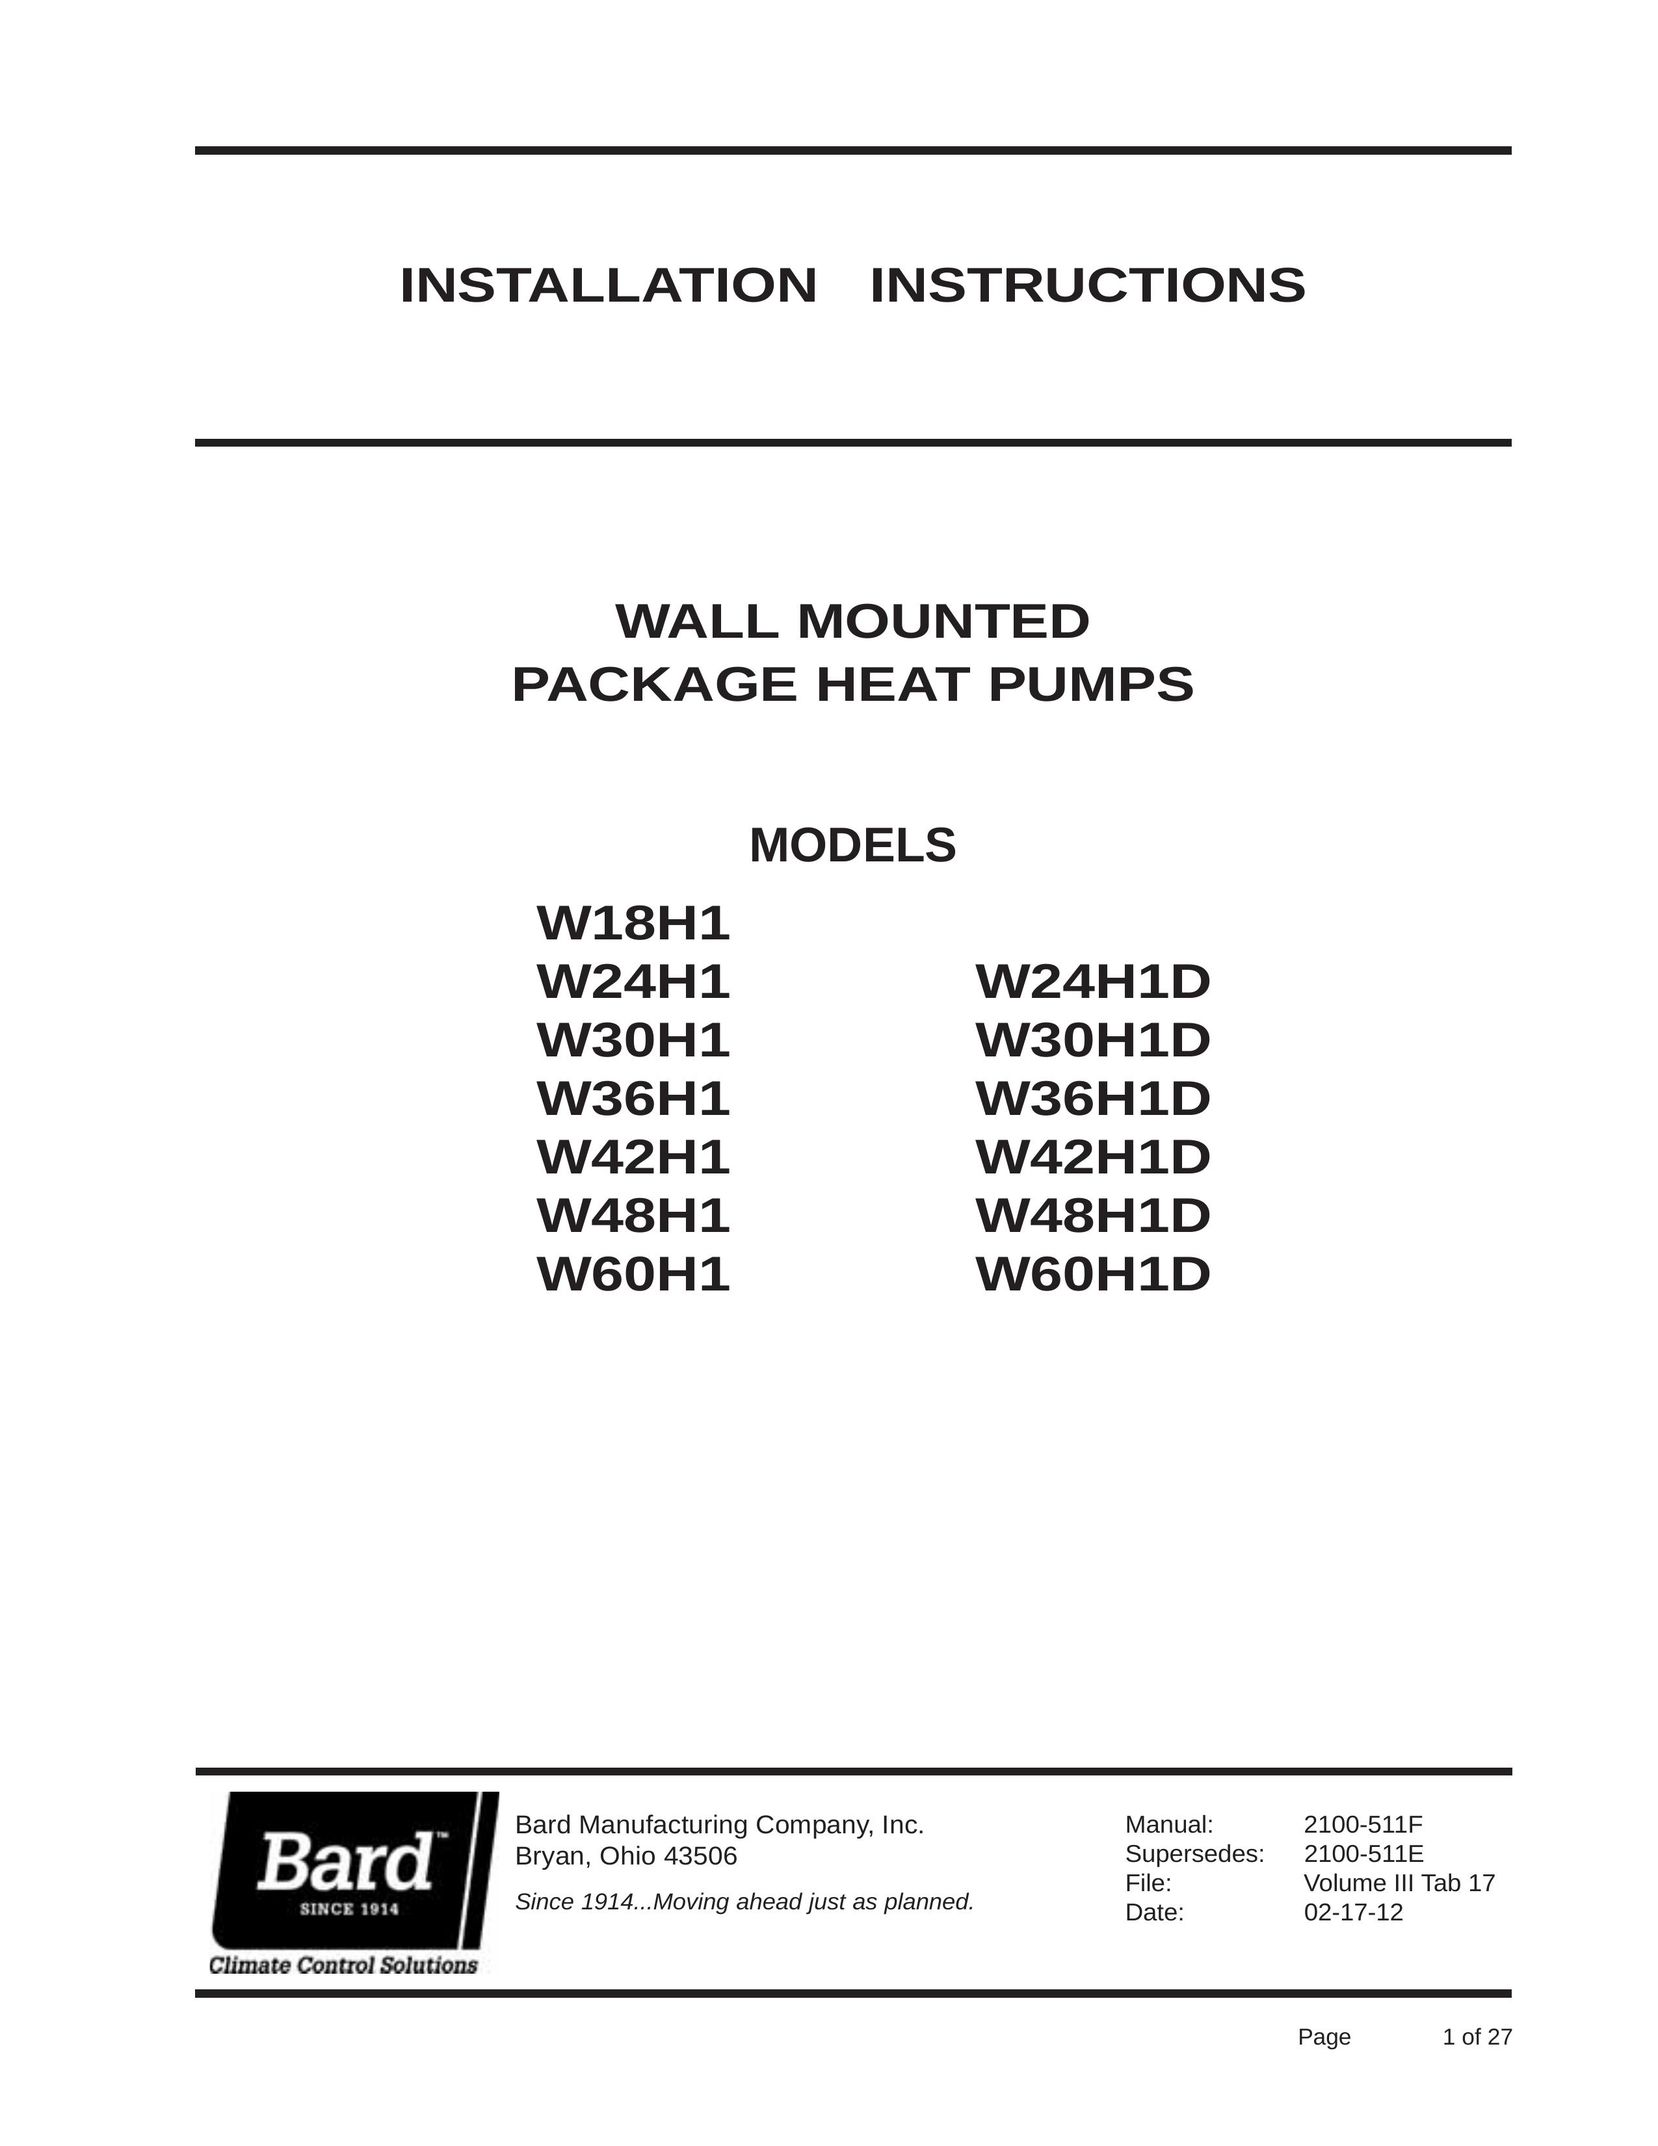 Bard W24H1D Heat Pump User Manual